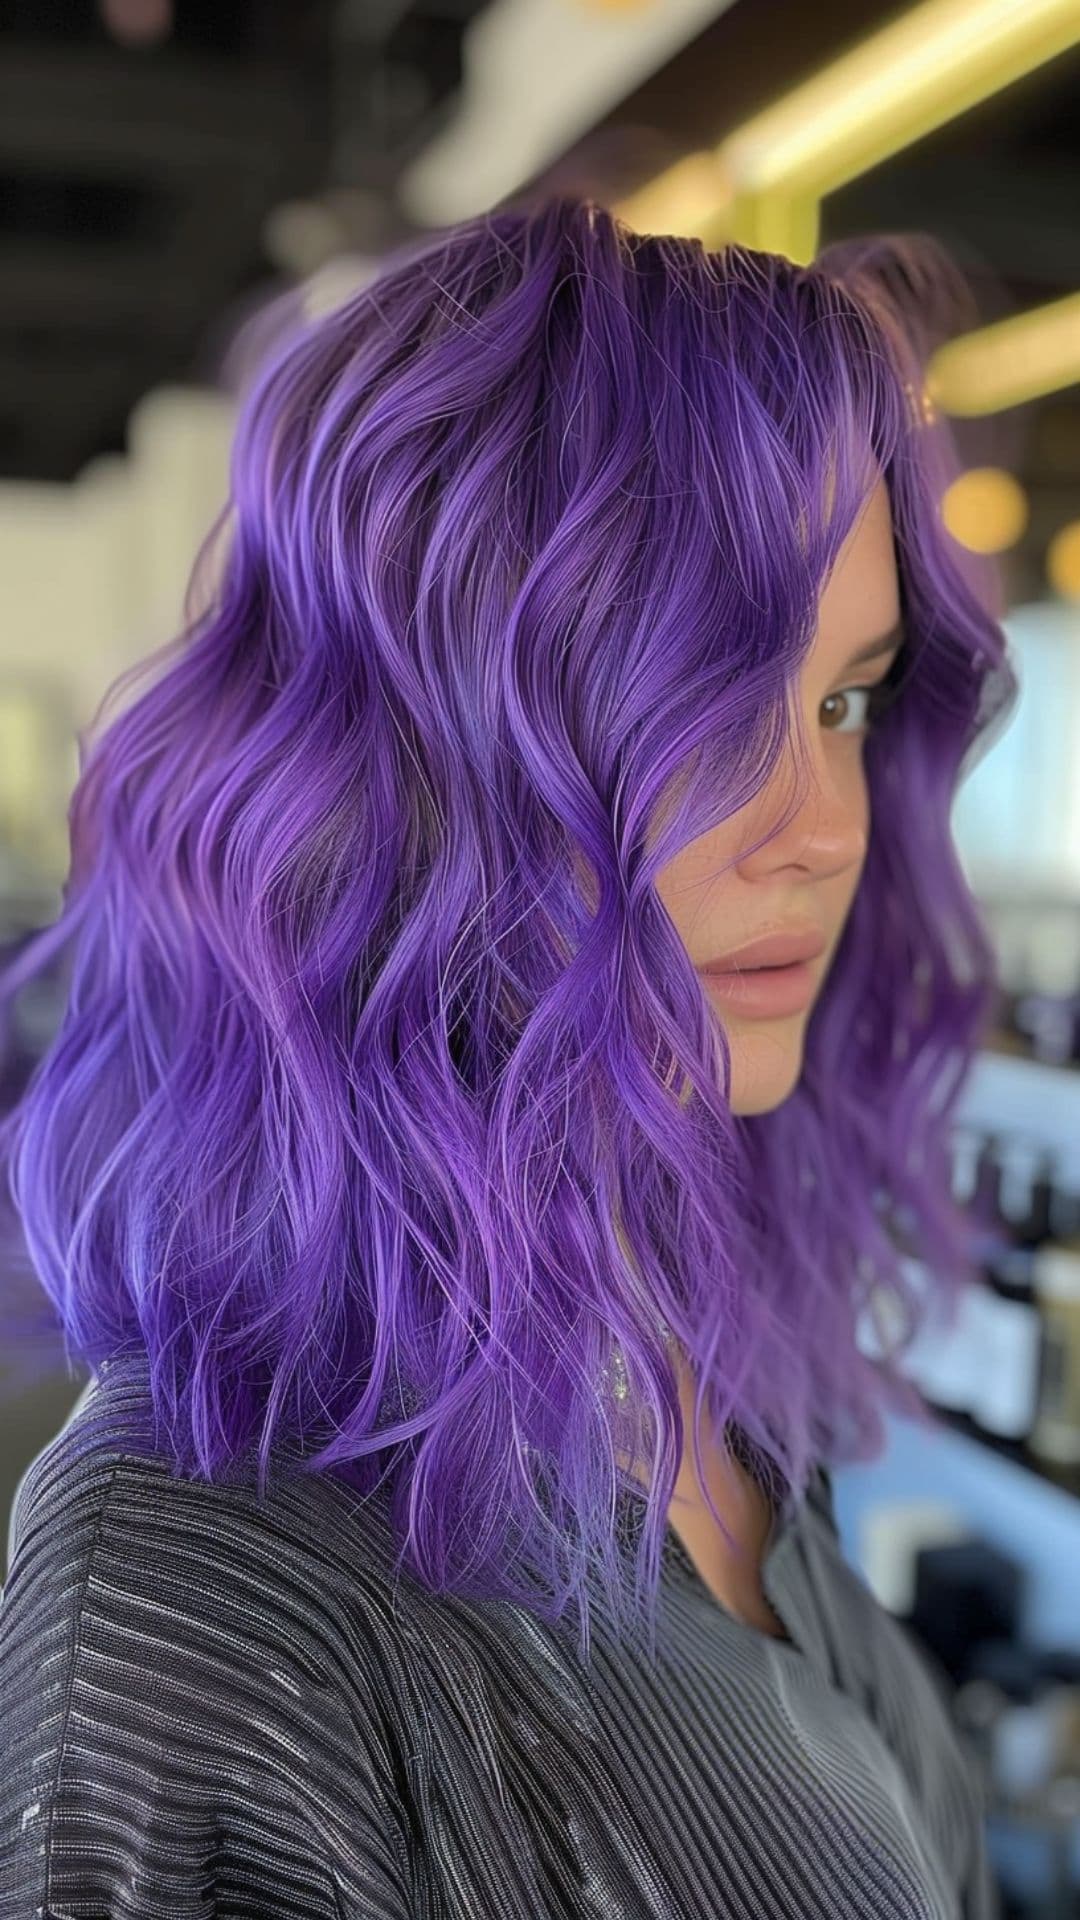 A woman modelling a vibrant purple hair.